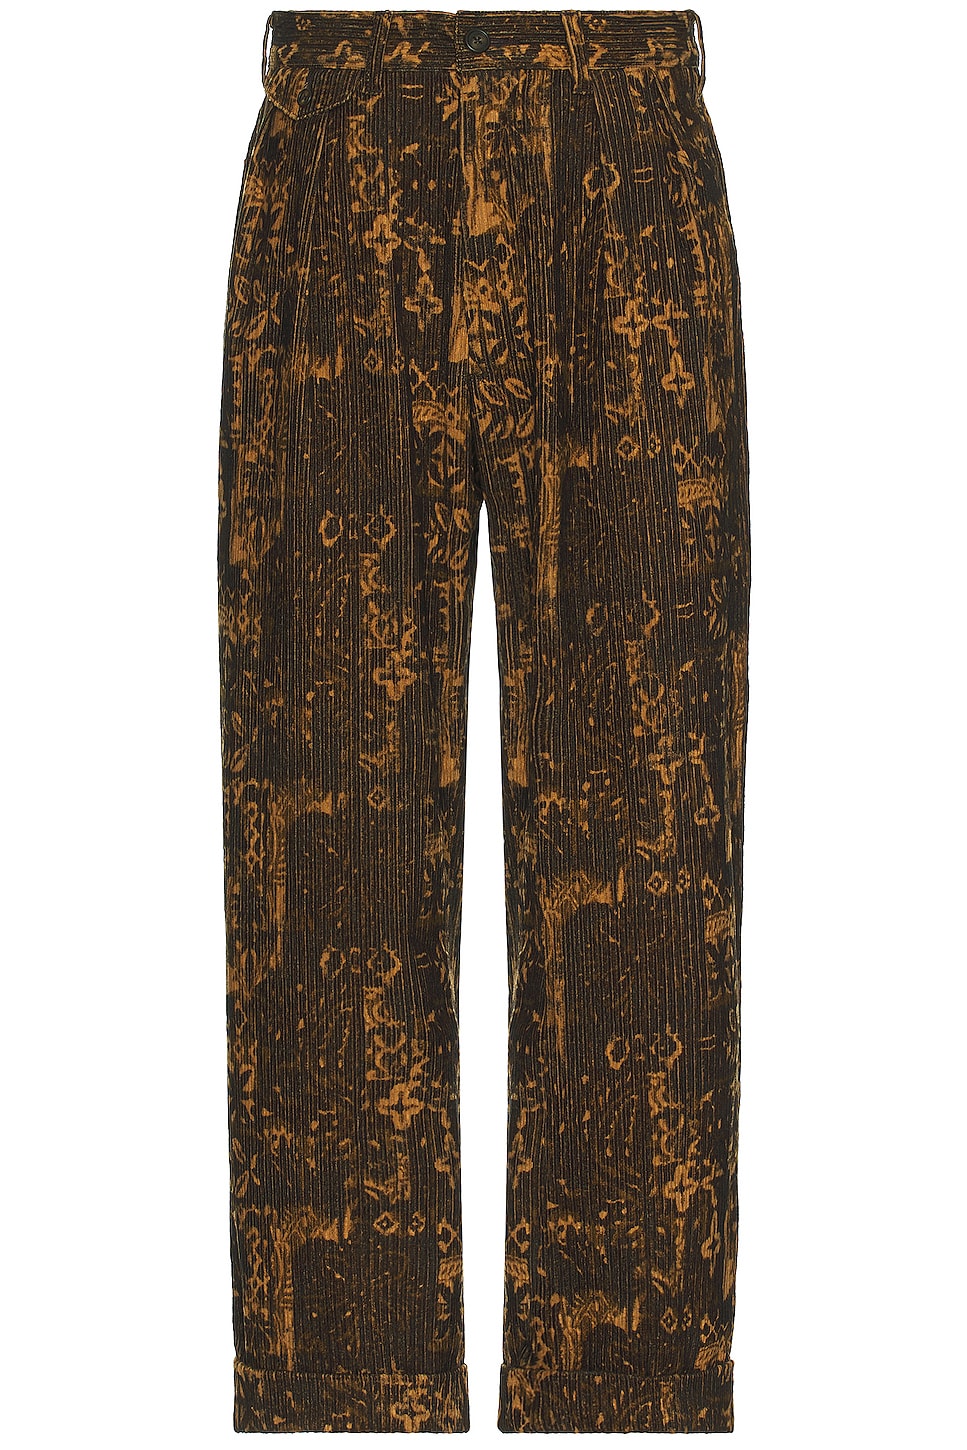 Image 1 of Beams Plus 2 Pleats Trouses Print in Brown